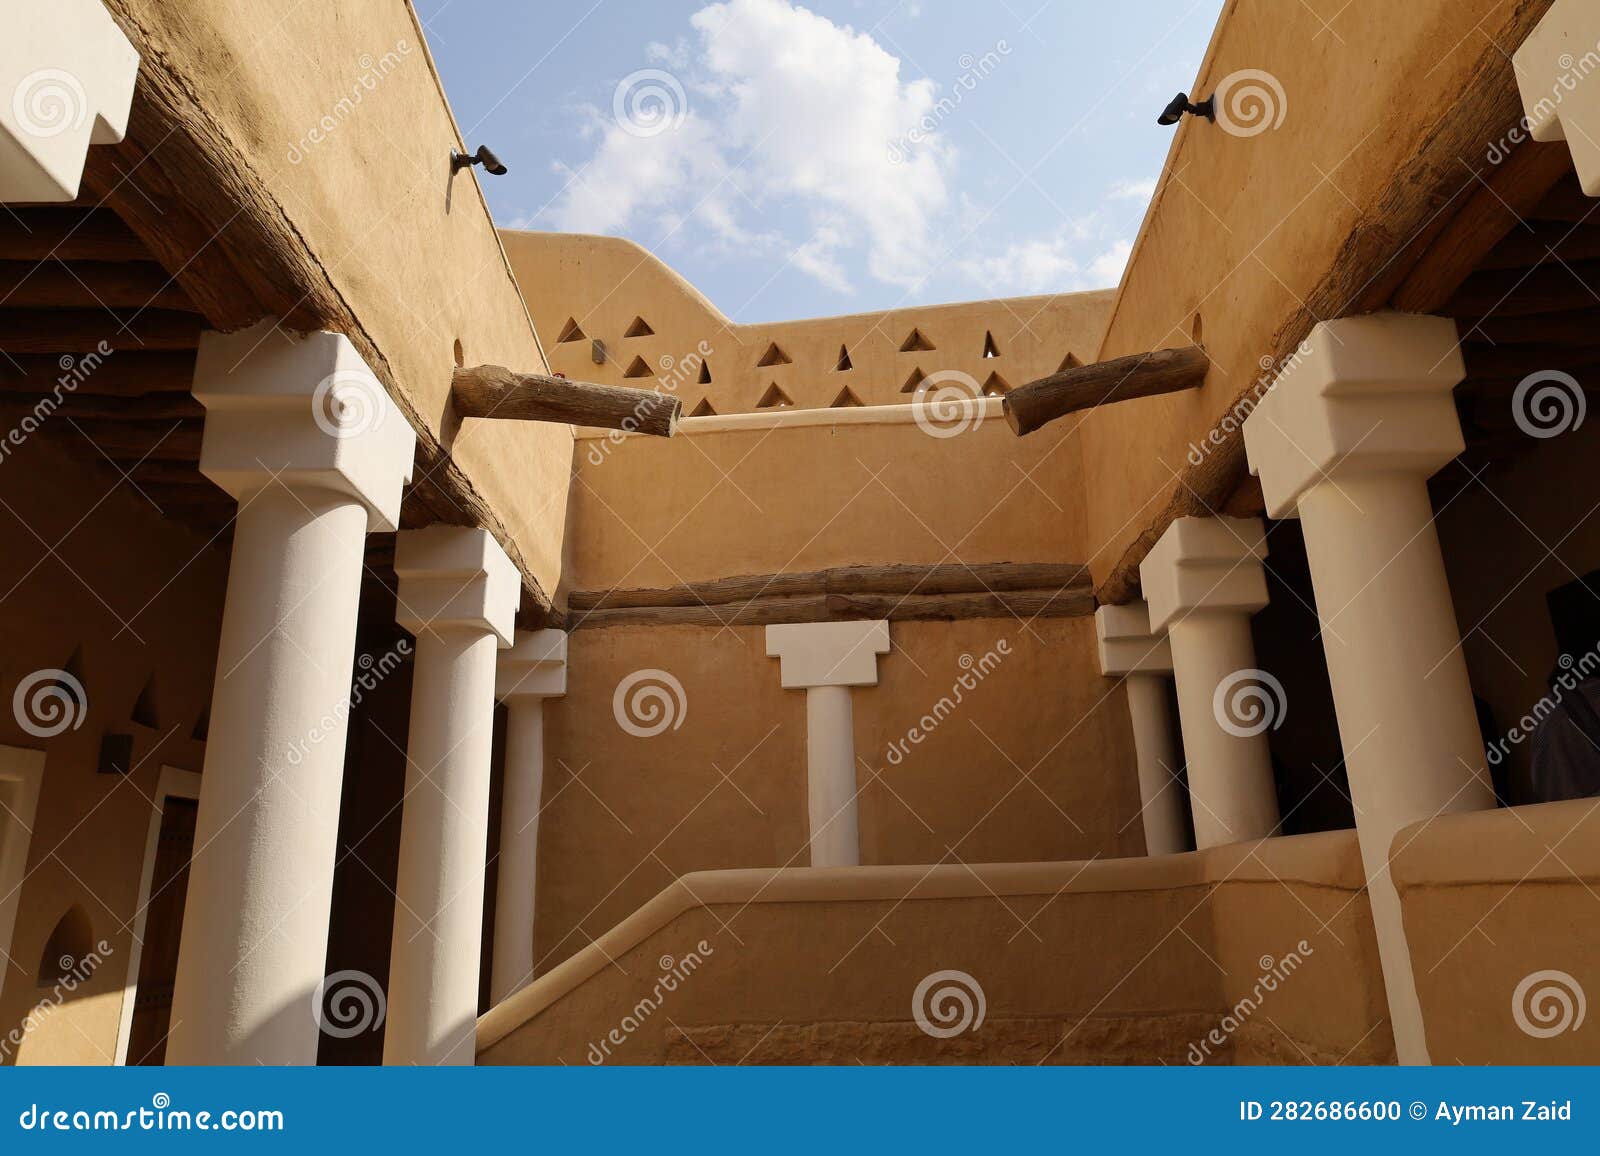 al diriyah old capital . riyadh , saudi arabia - diriyah ruins - saudi culture. national day